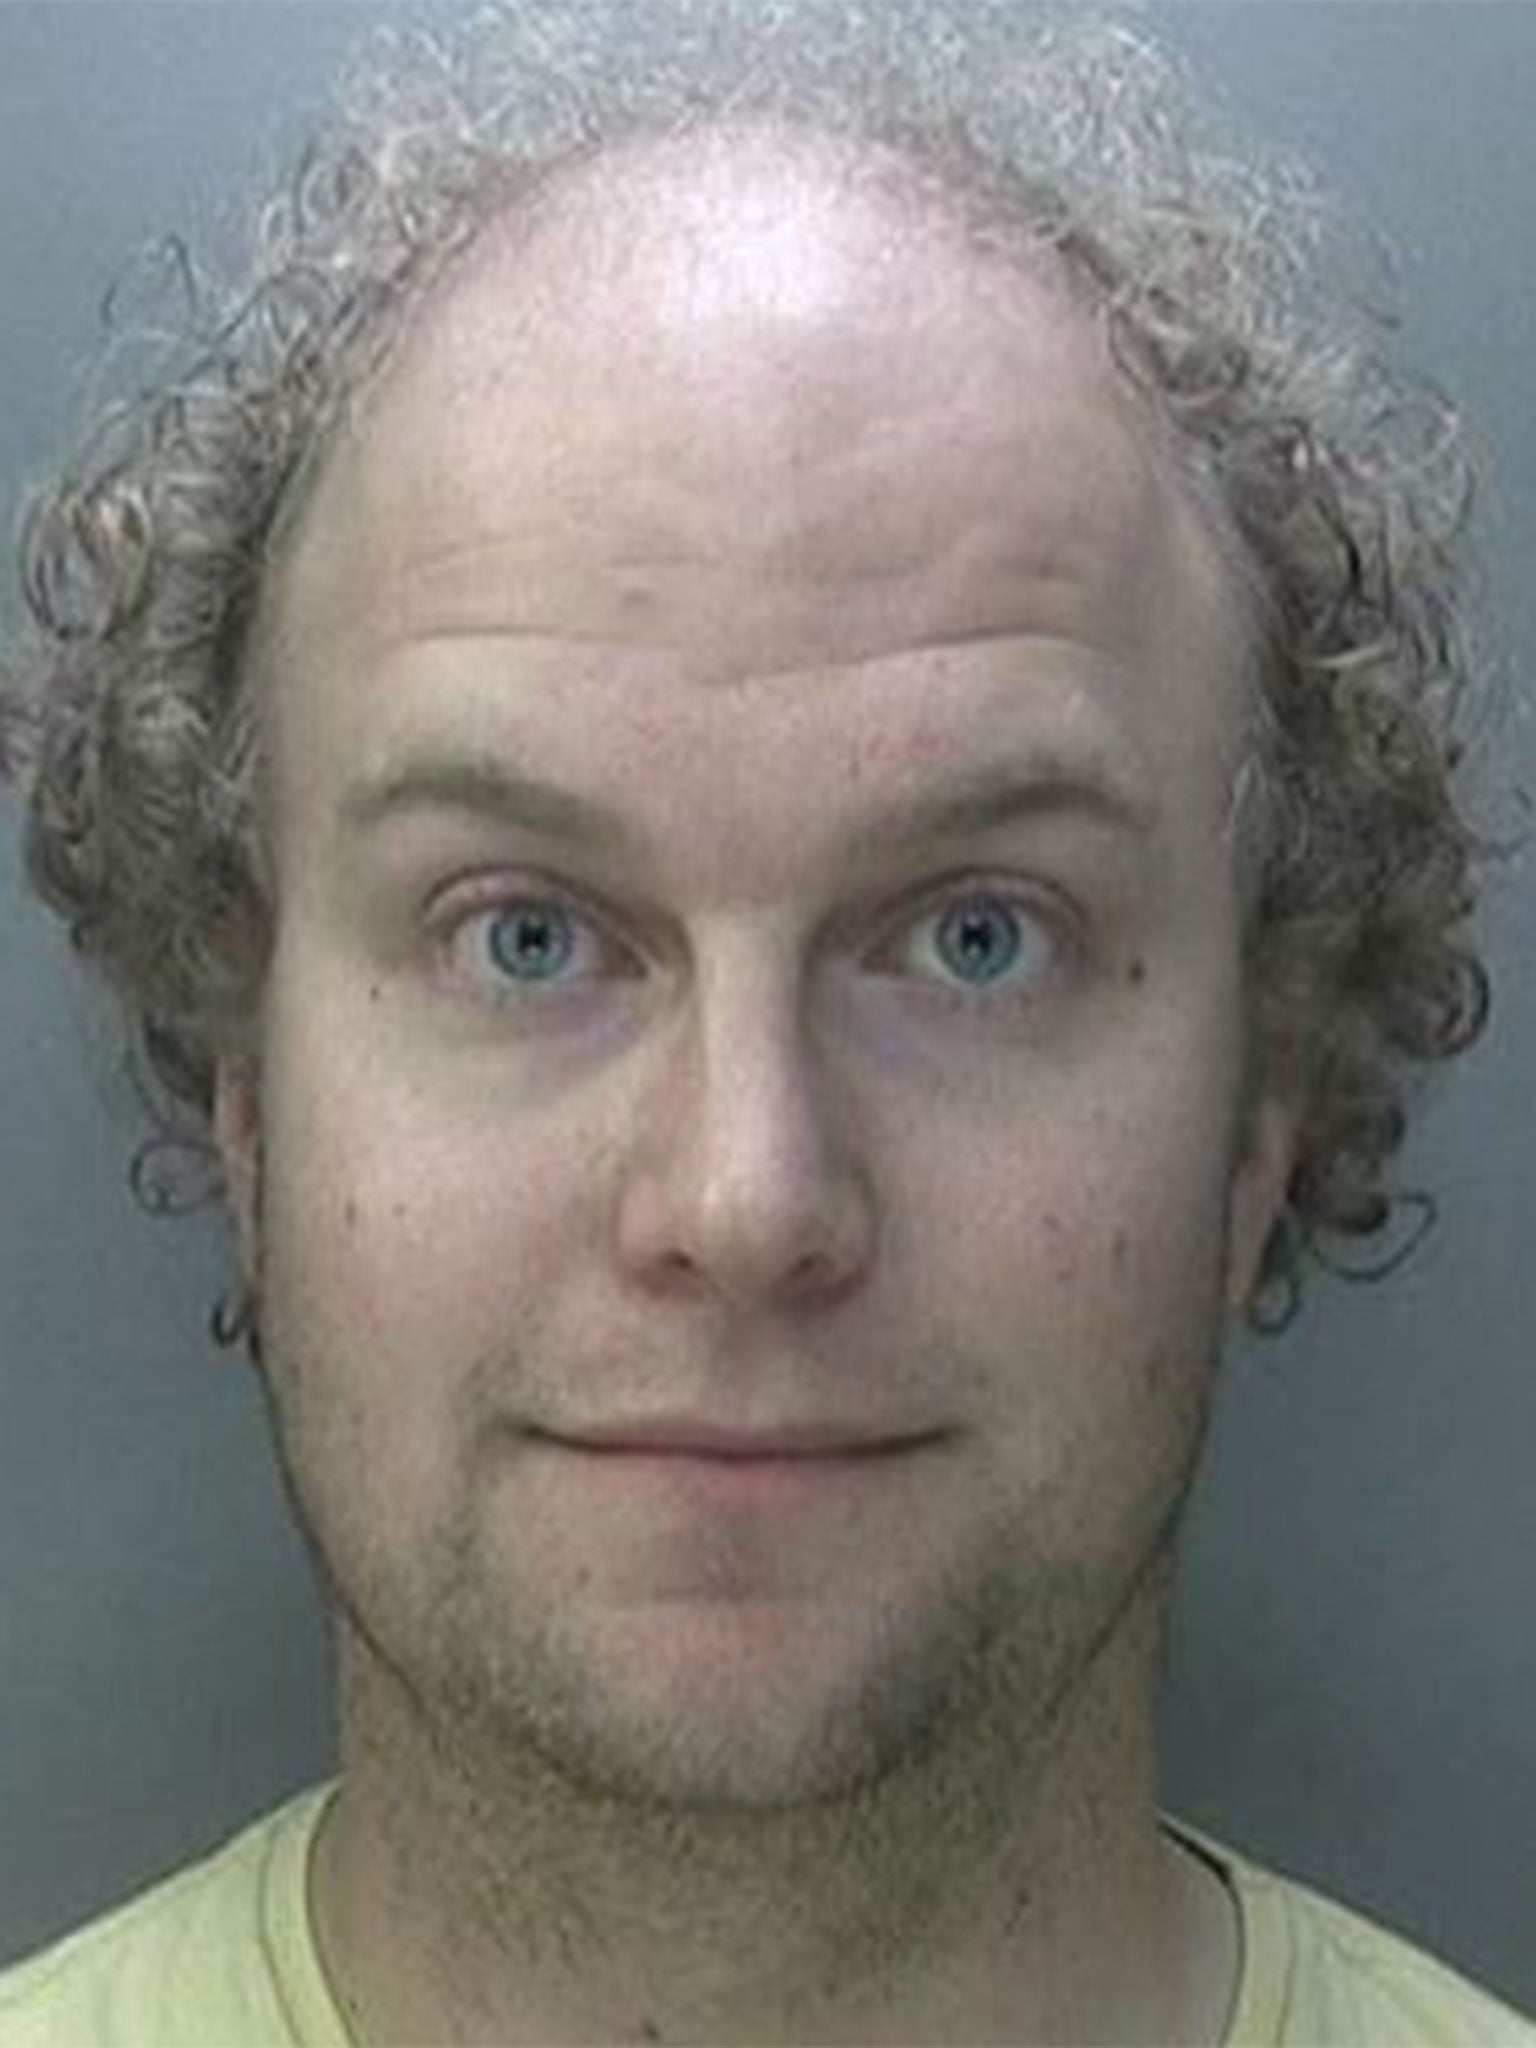 Bbs Nudist Gymnastics - Matthew Falder: One of Britain's most prolific paedophiles ...